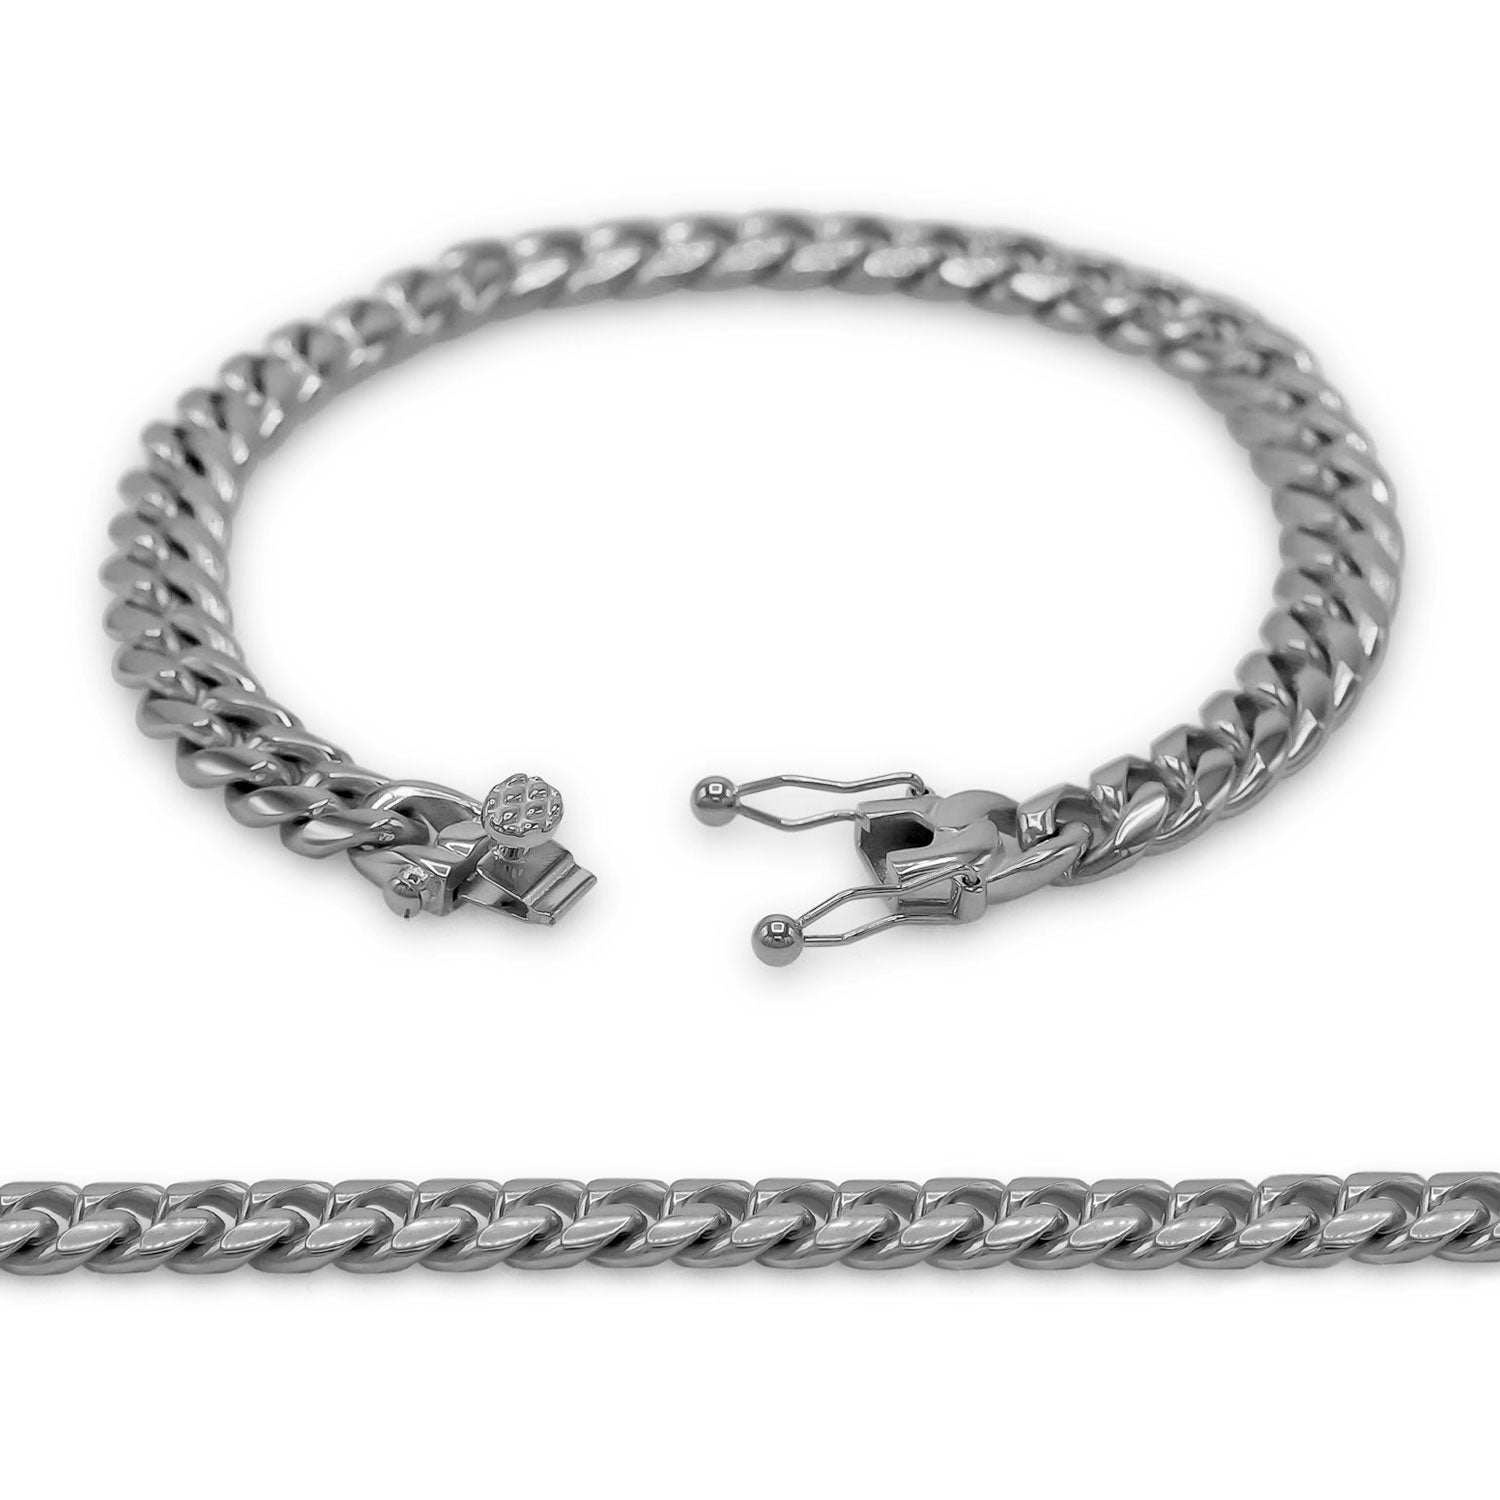 Cuban Link Chain Silver Curb Bracelet 8.5" Stainless Steel Men Jewelry